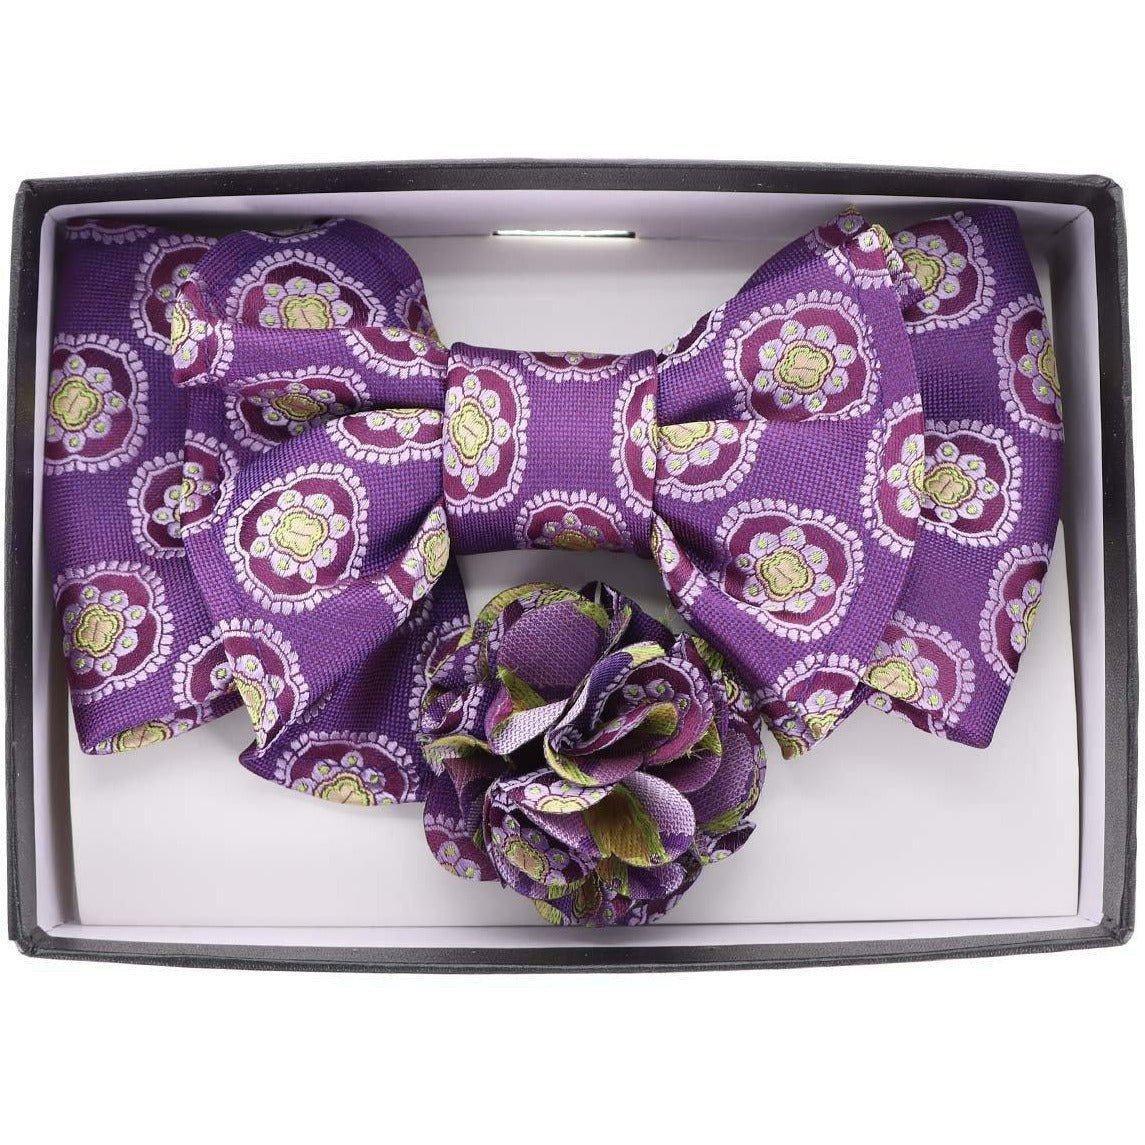 Vittorio Farina XL Bow Tie, Pocket Square & Flower Lapel Pin - XL2120 - Classy Cufflinks